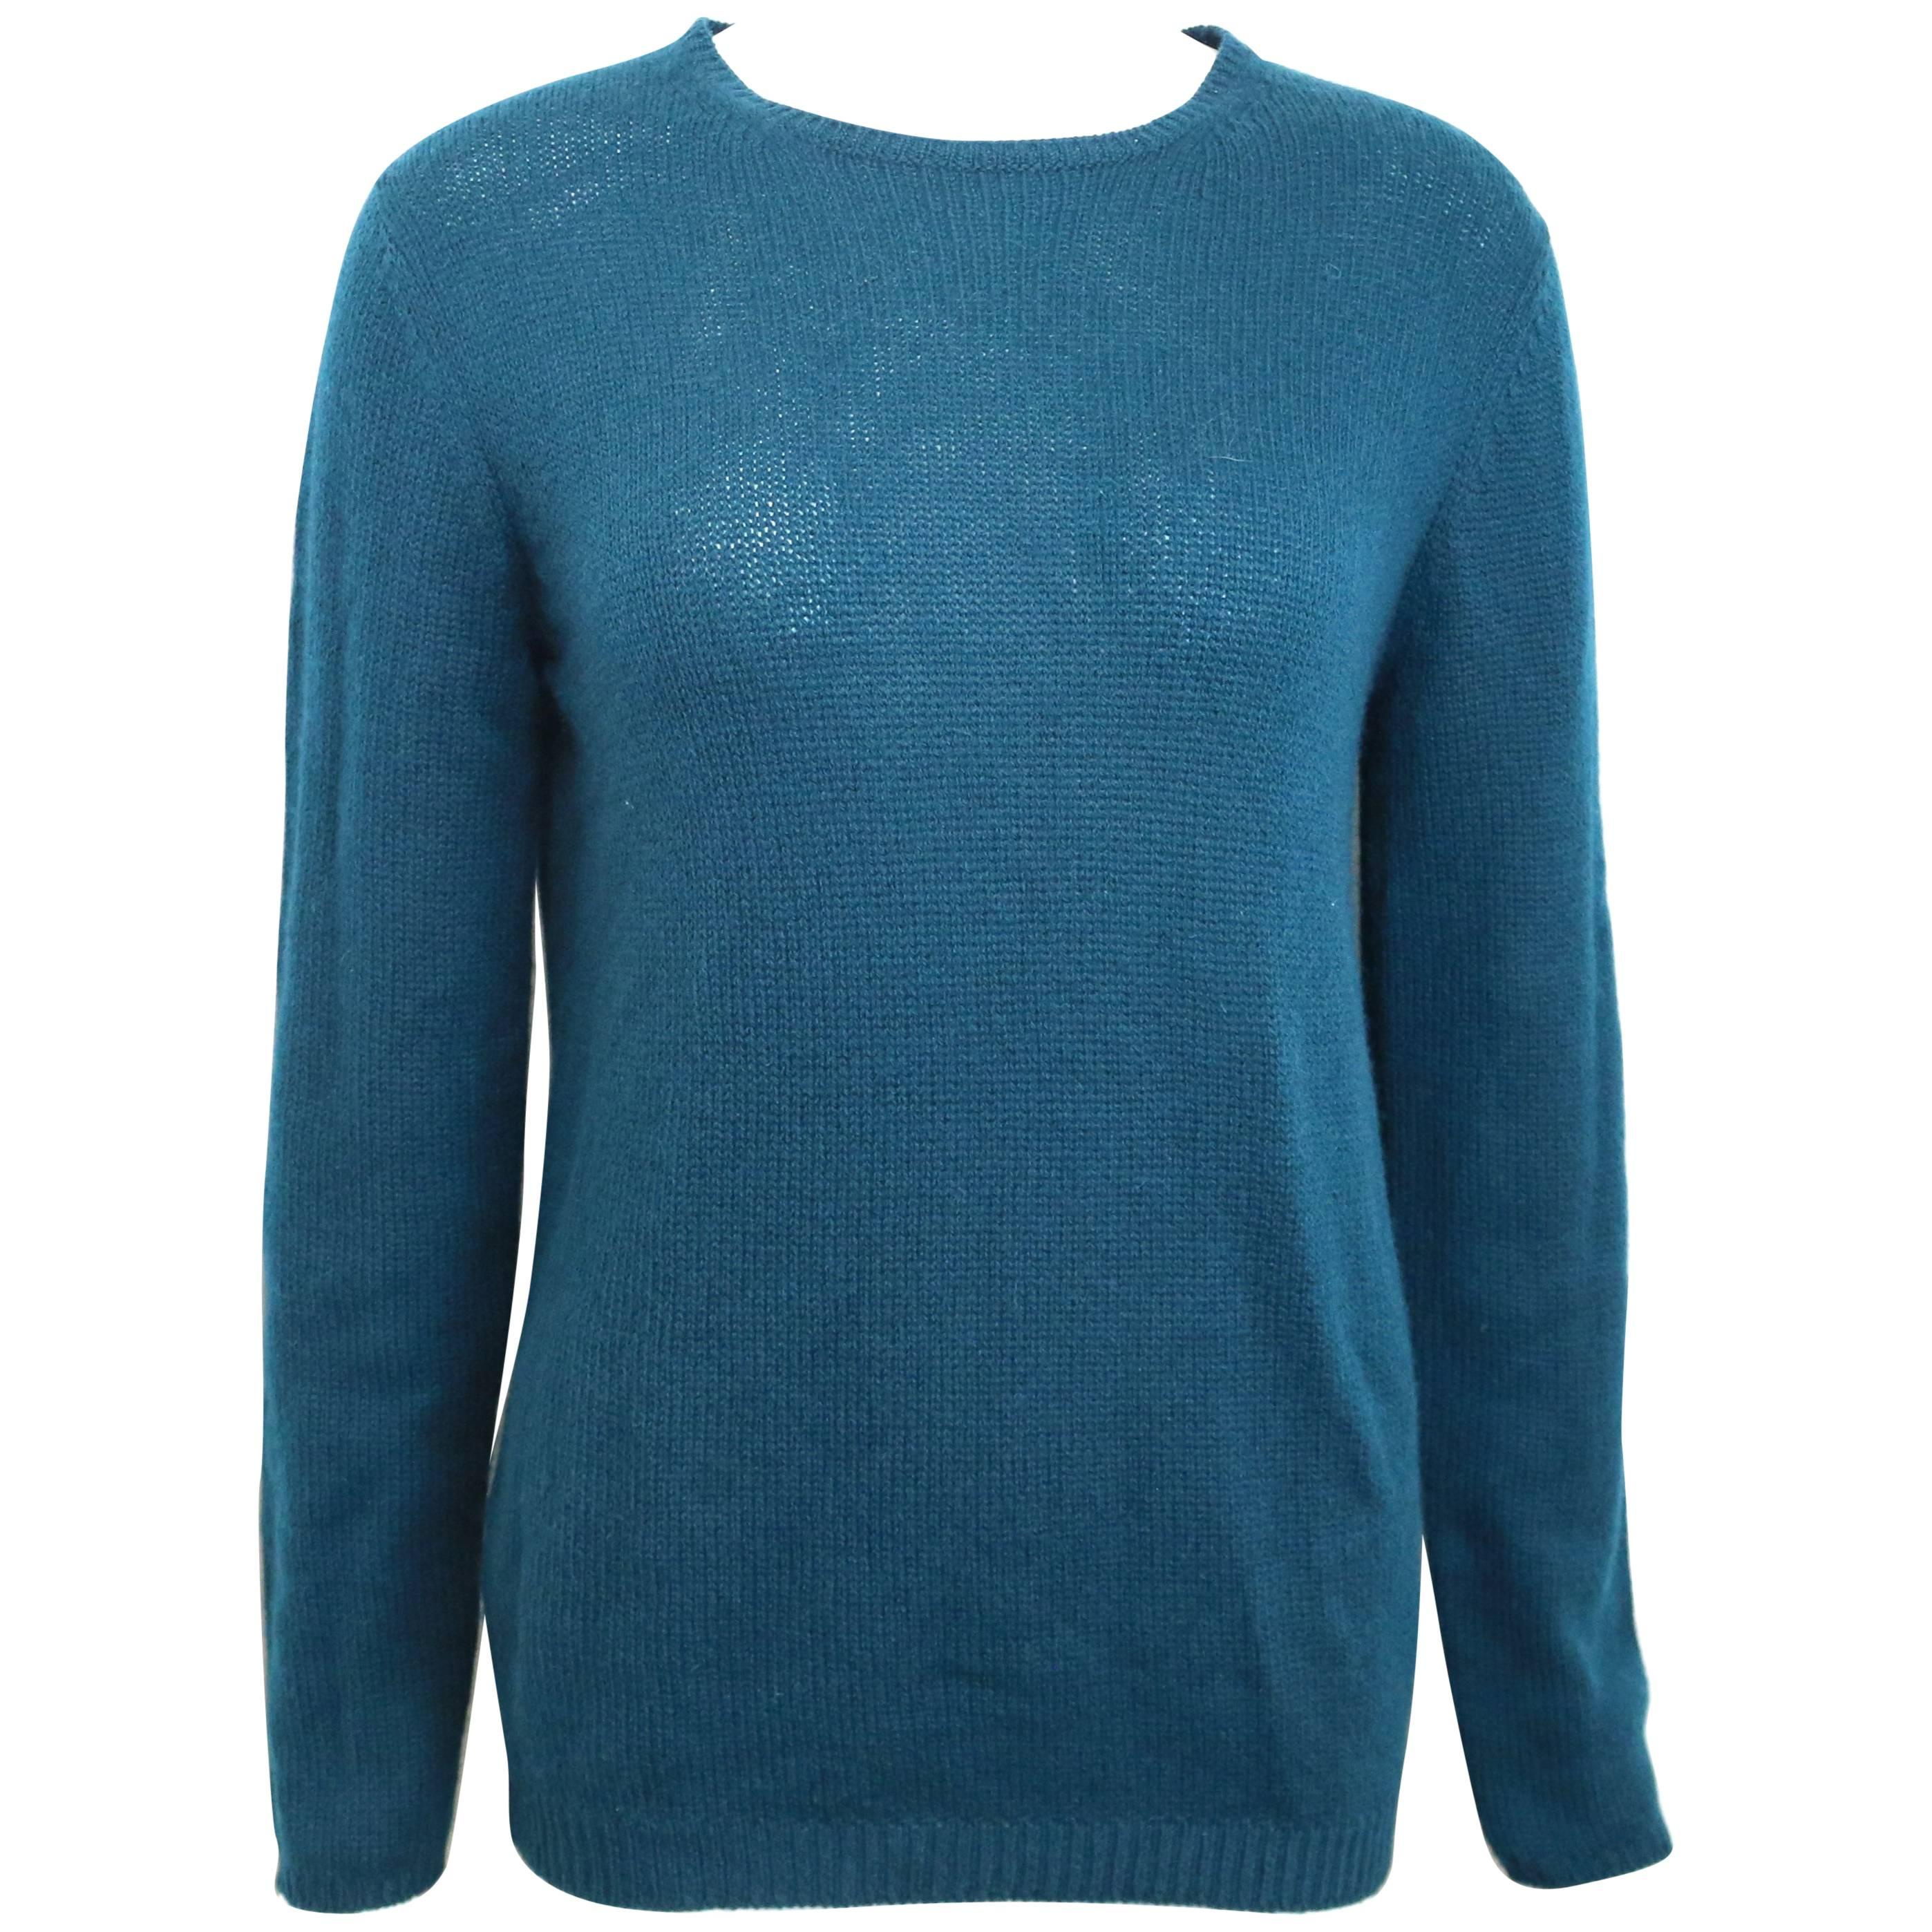 Vintage 90s Prada Teal Cashmere Sweater  For Sale